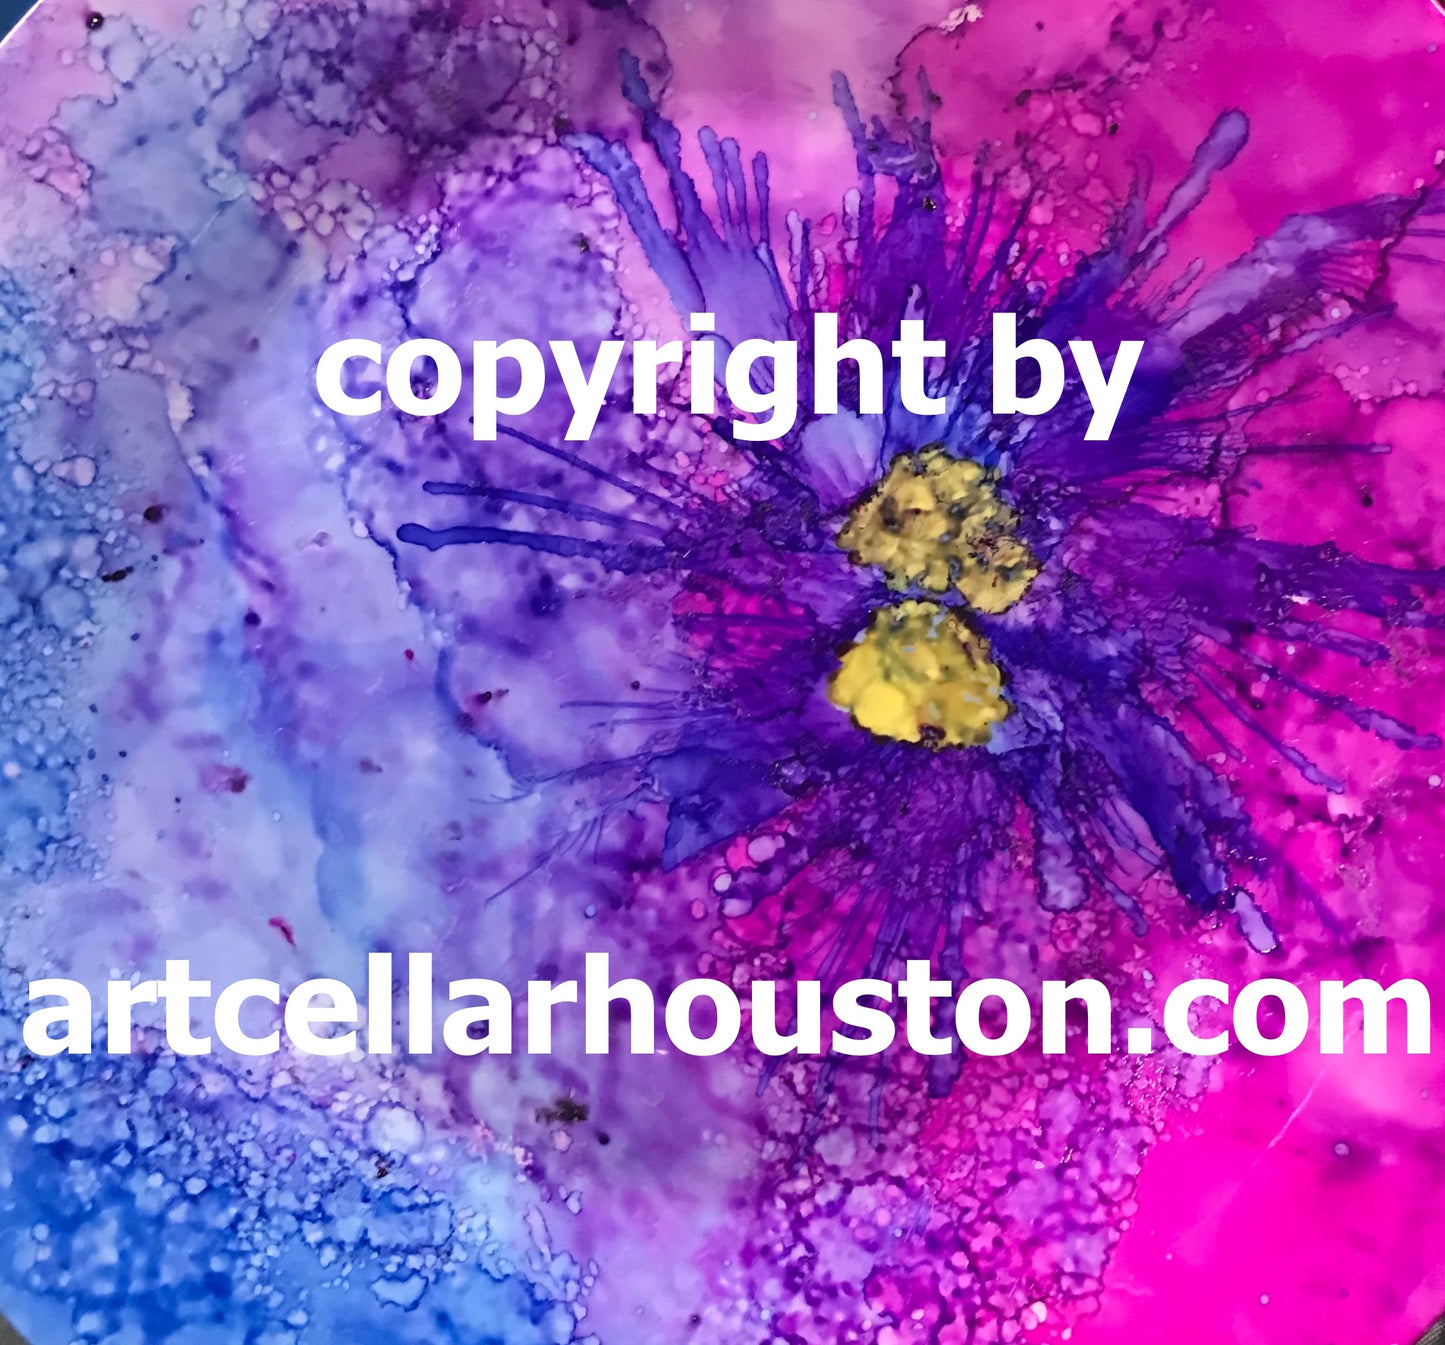 Wed, Feb 10, 4-6P “Alcohol Inks on Yupo” Public Houston Painting Class